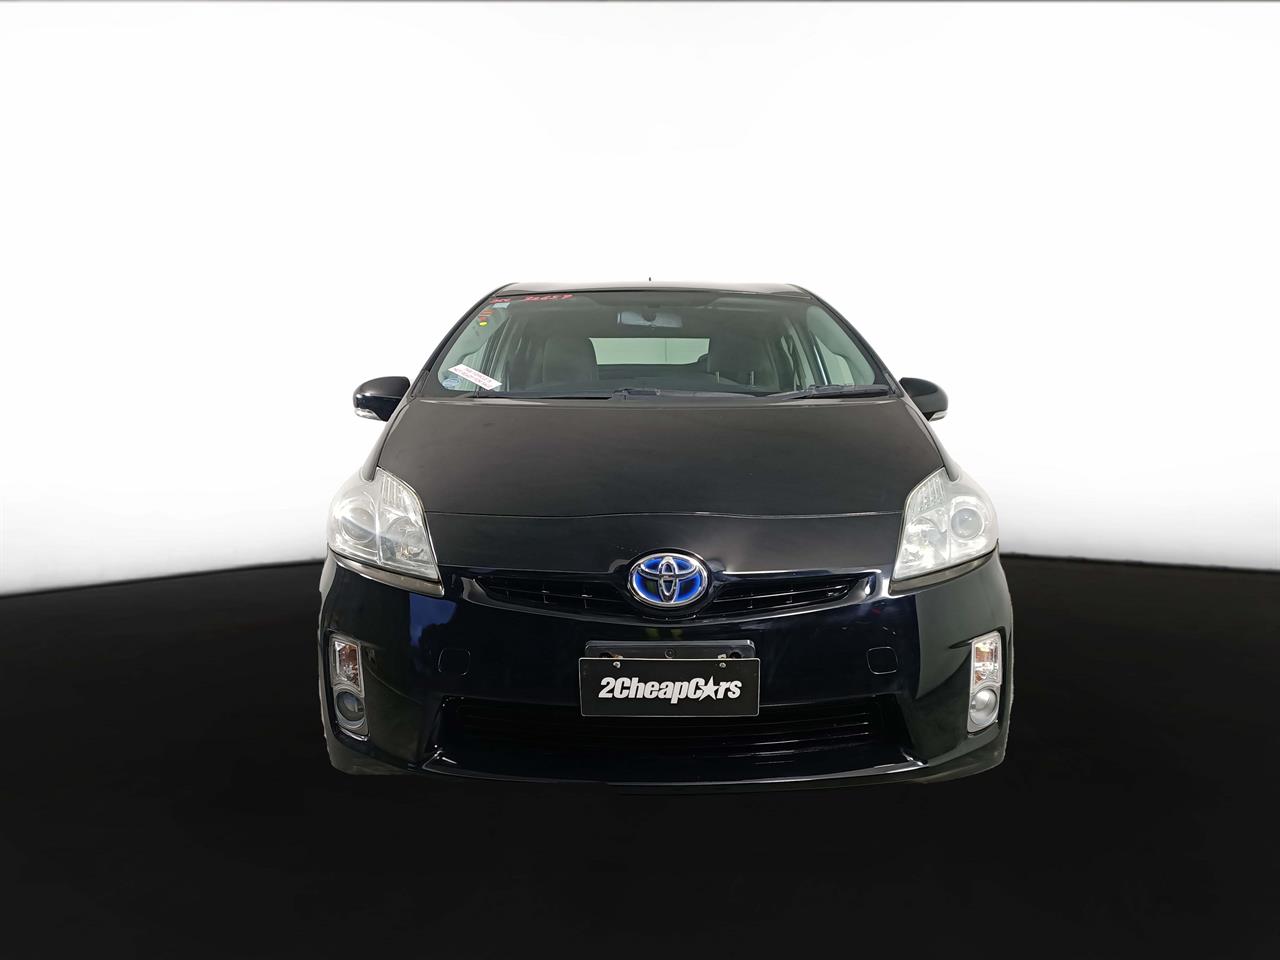 2011 Toyota Prius Hybrid